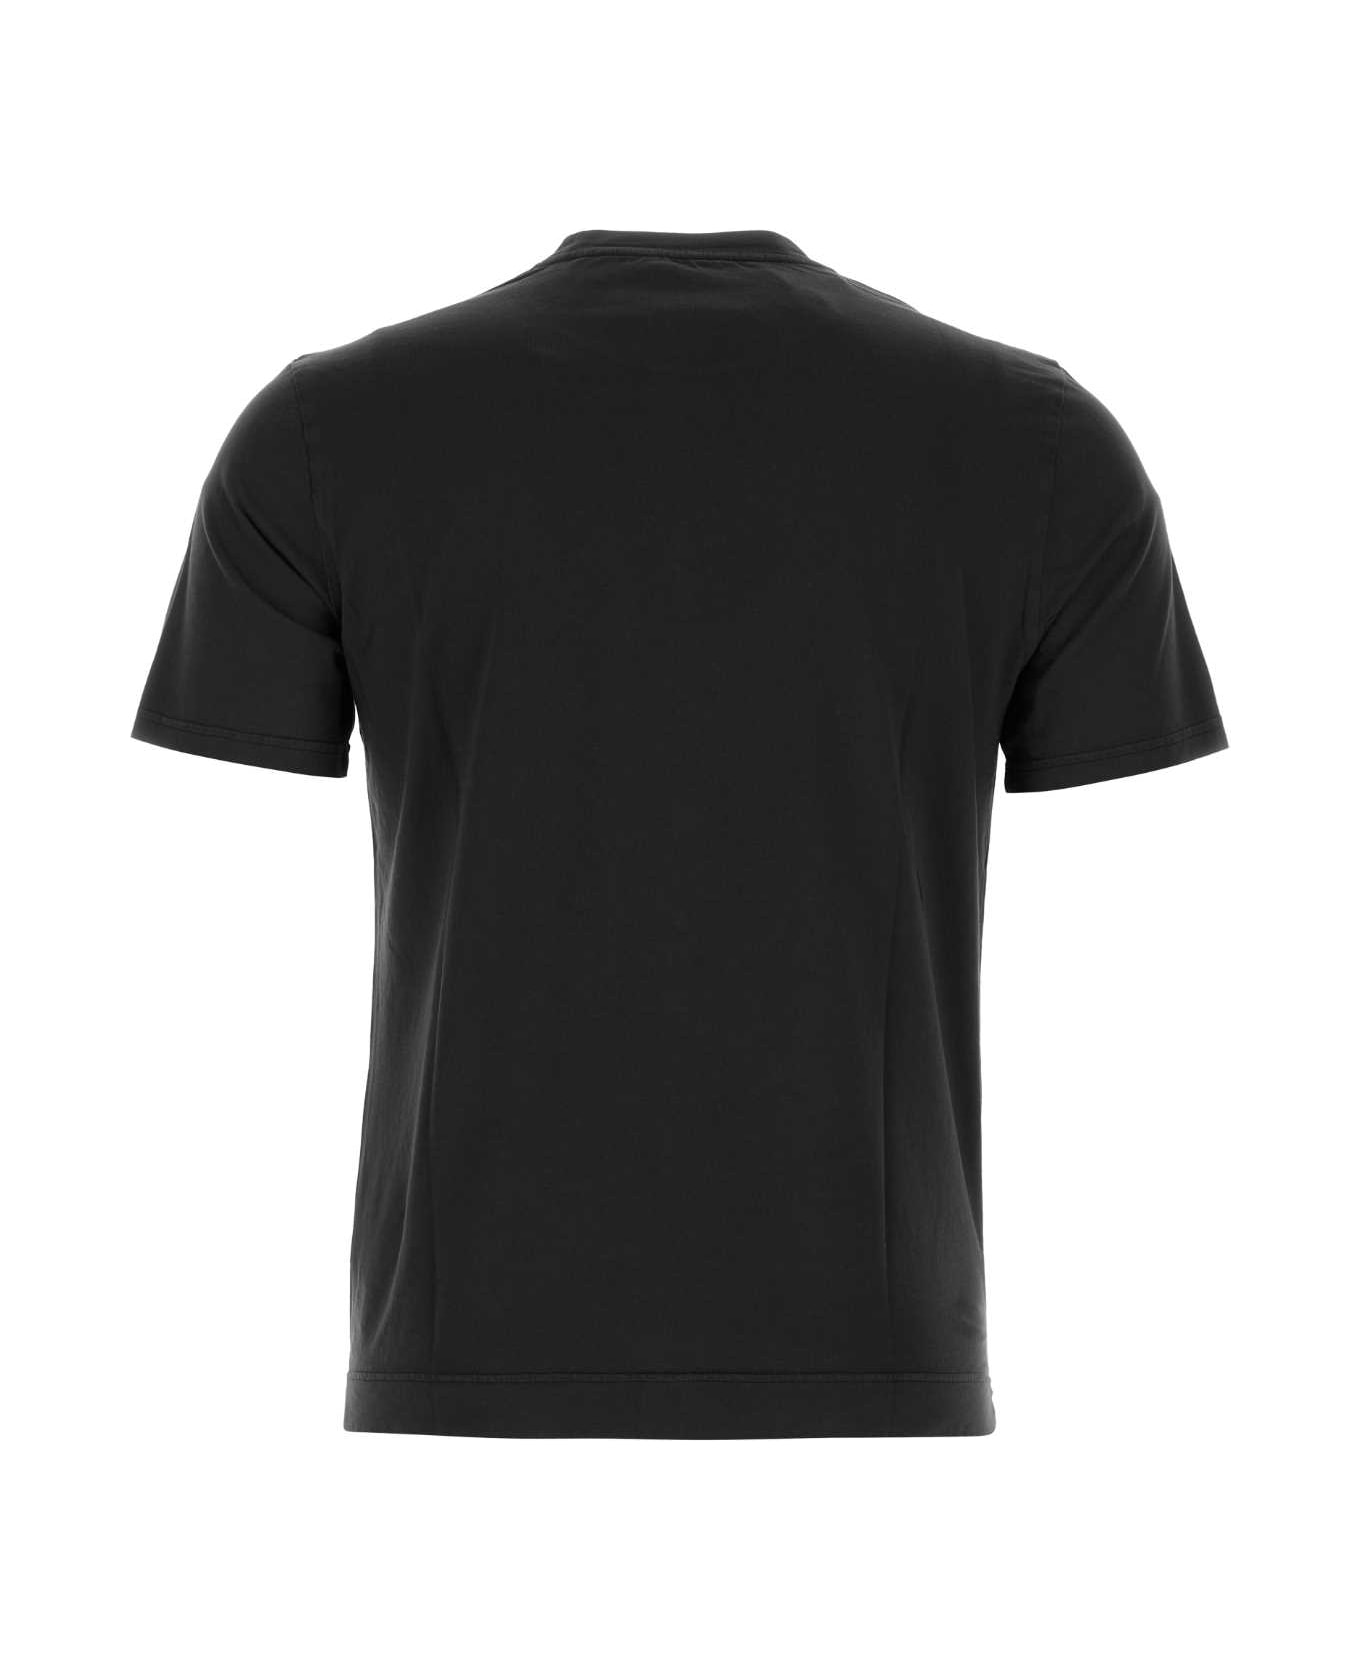 Fedeli Black Cotton Extreme T-shirt - NERO シャツ